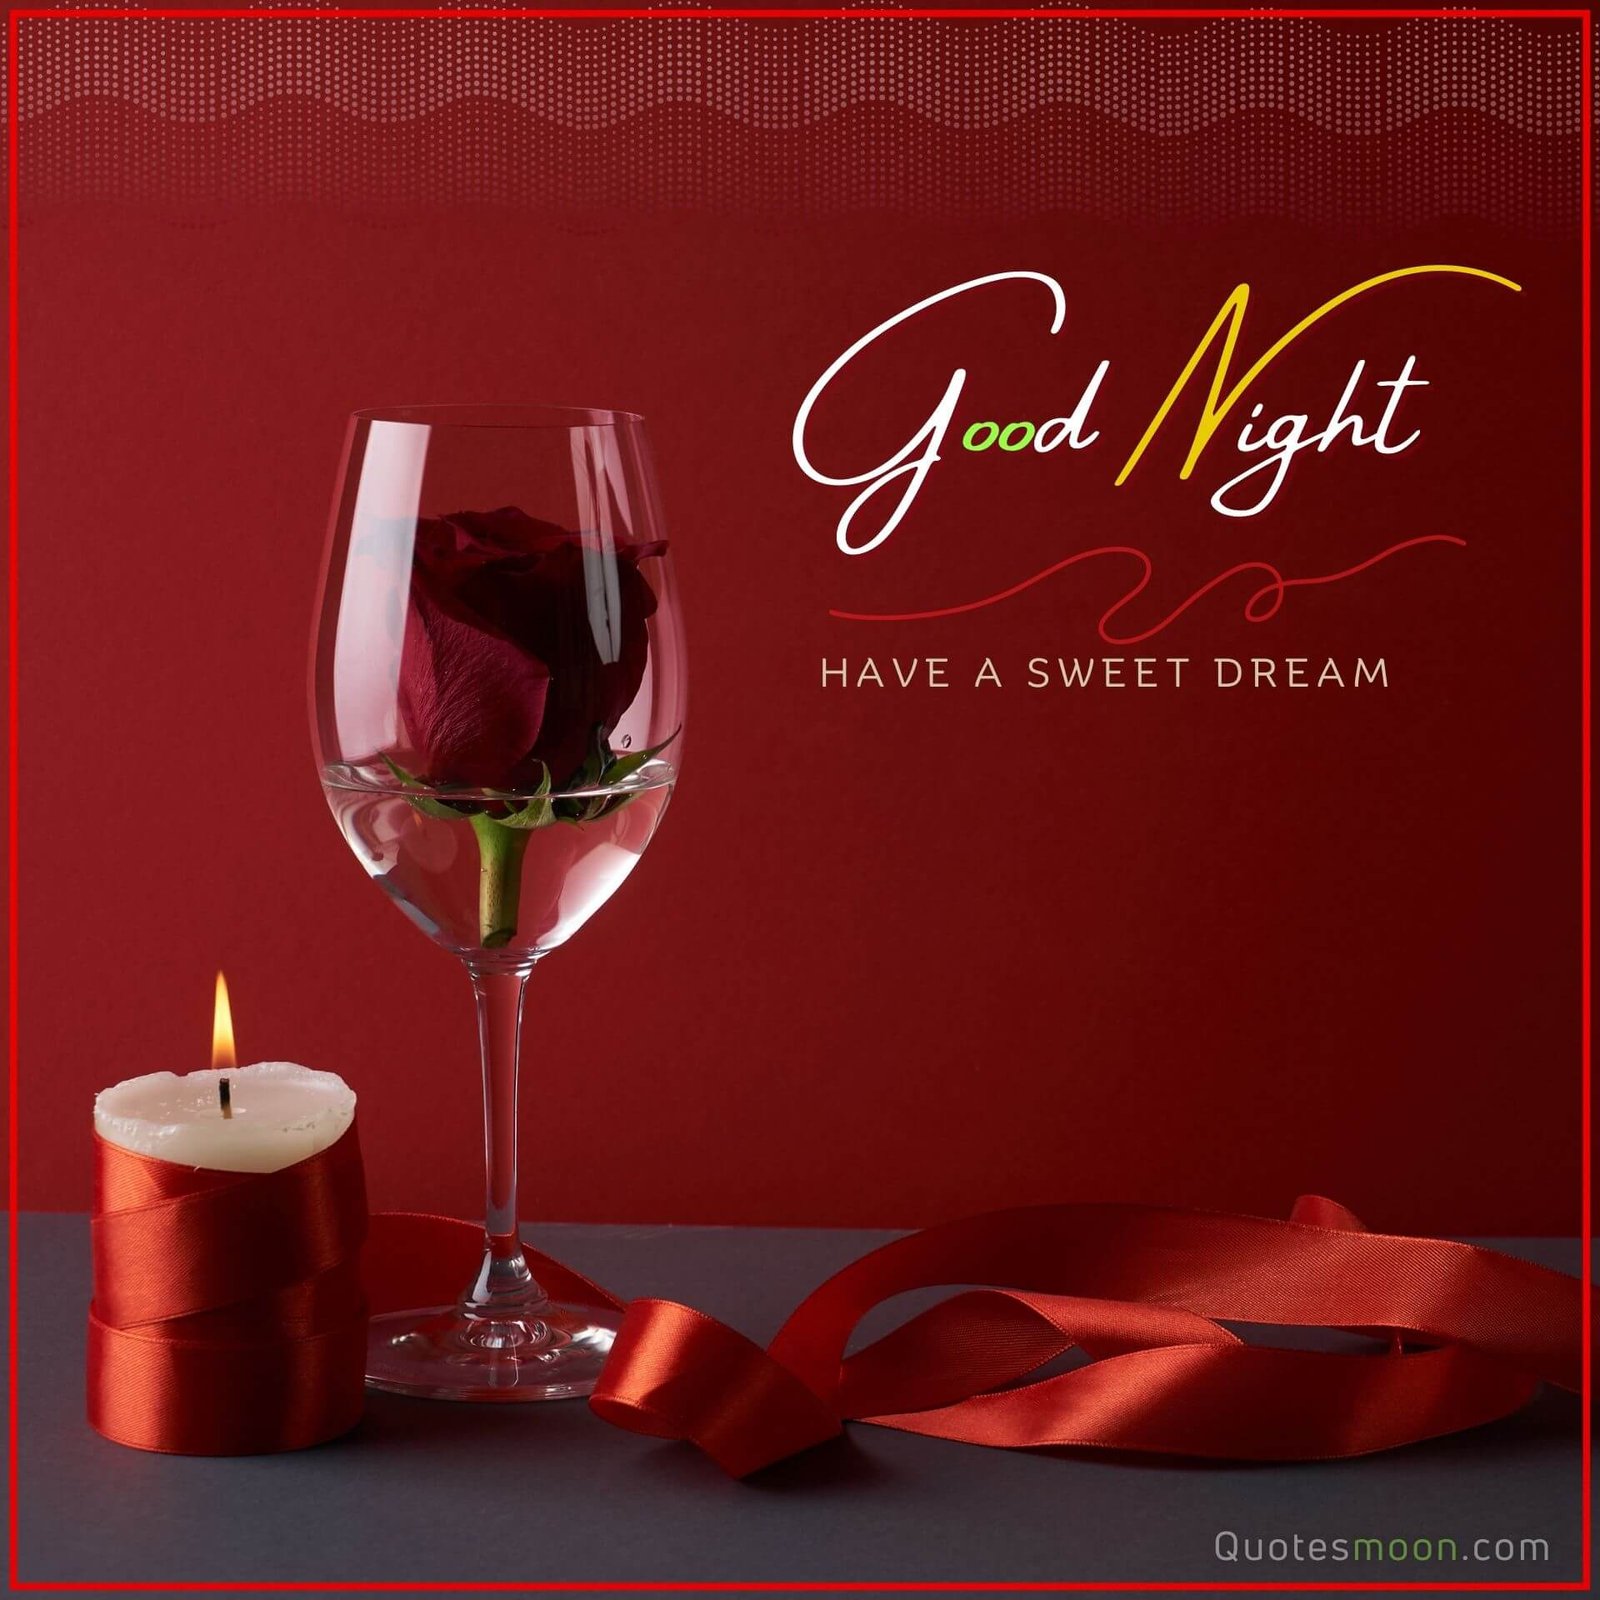 night with wine wishing image